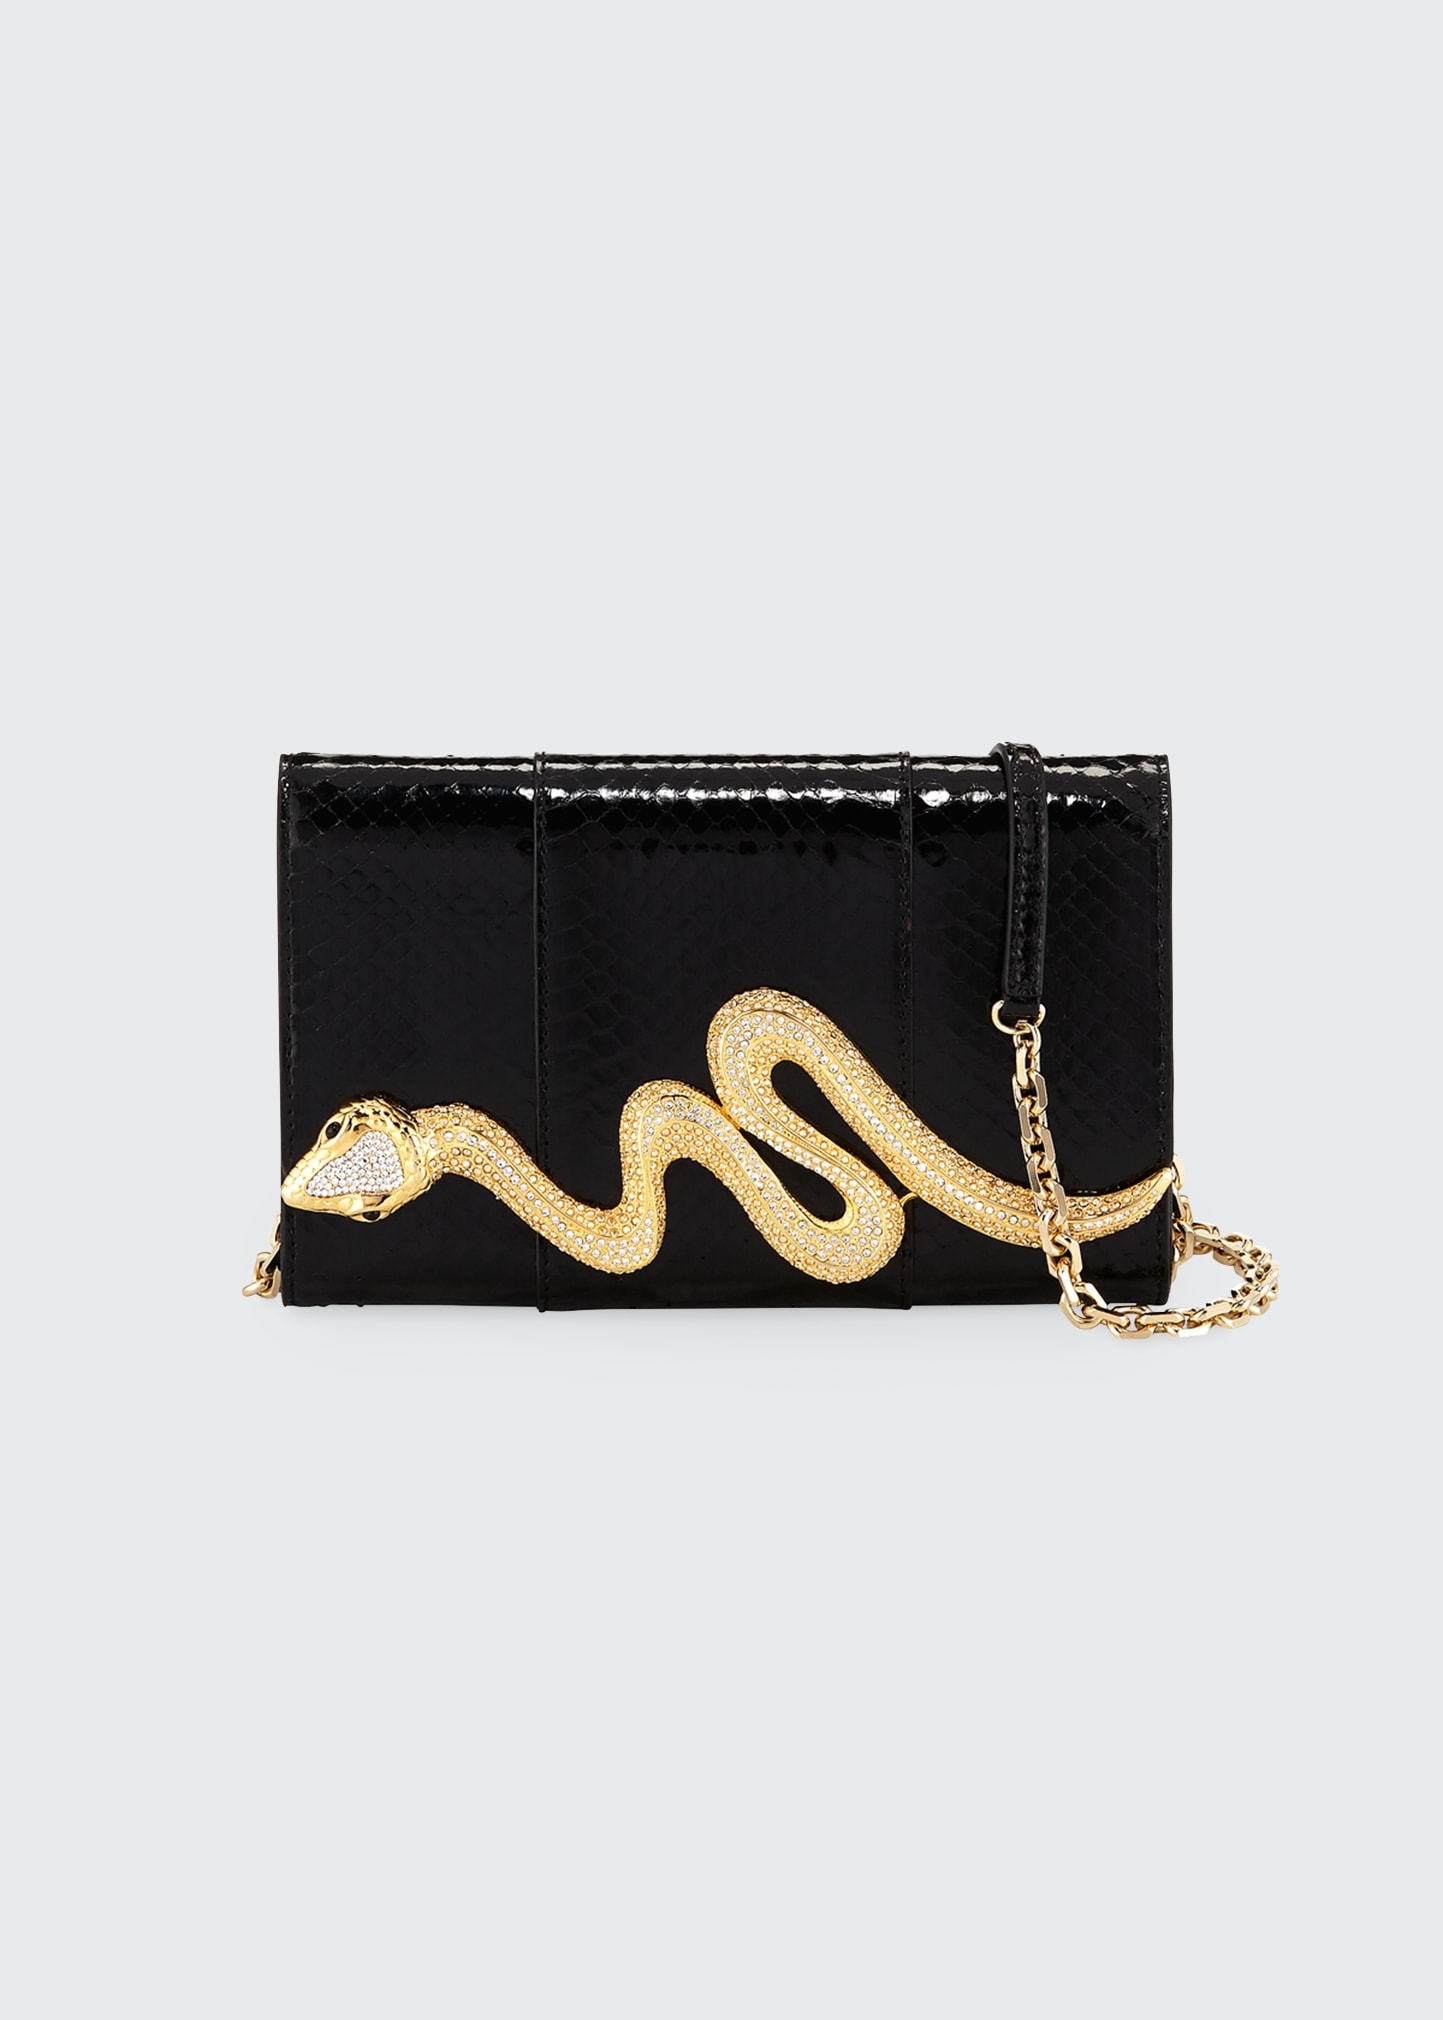 Judith Leiber Serpent Snakeskin Clutch Bag In Black